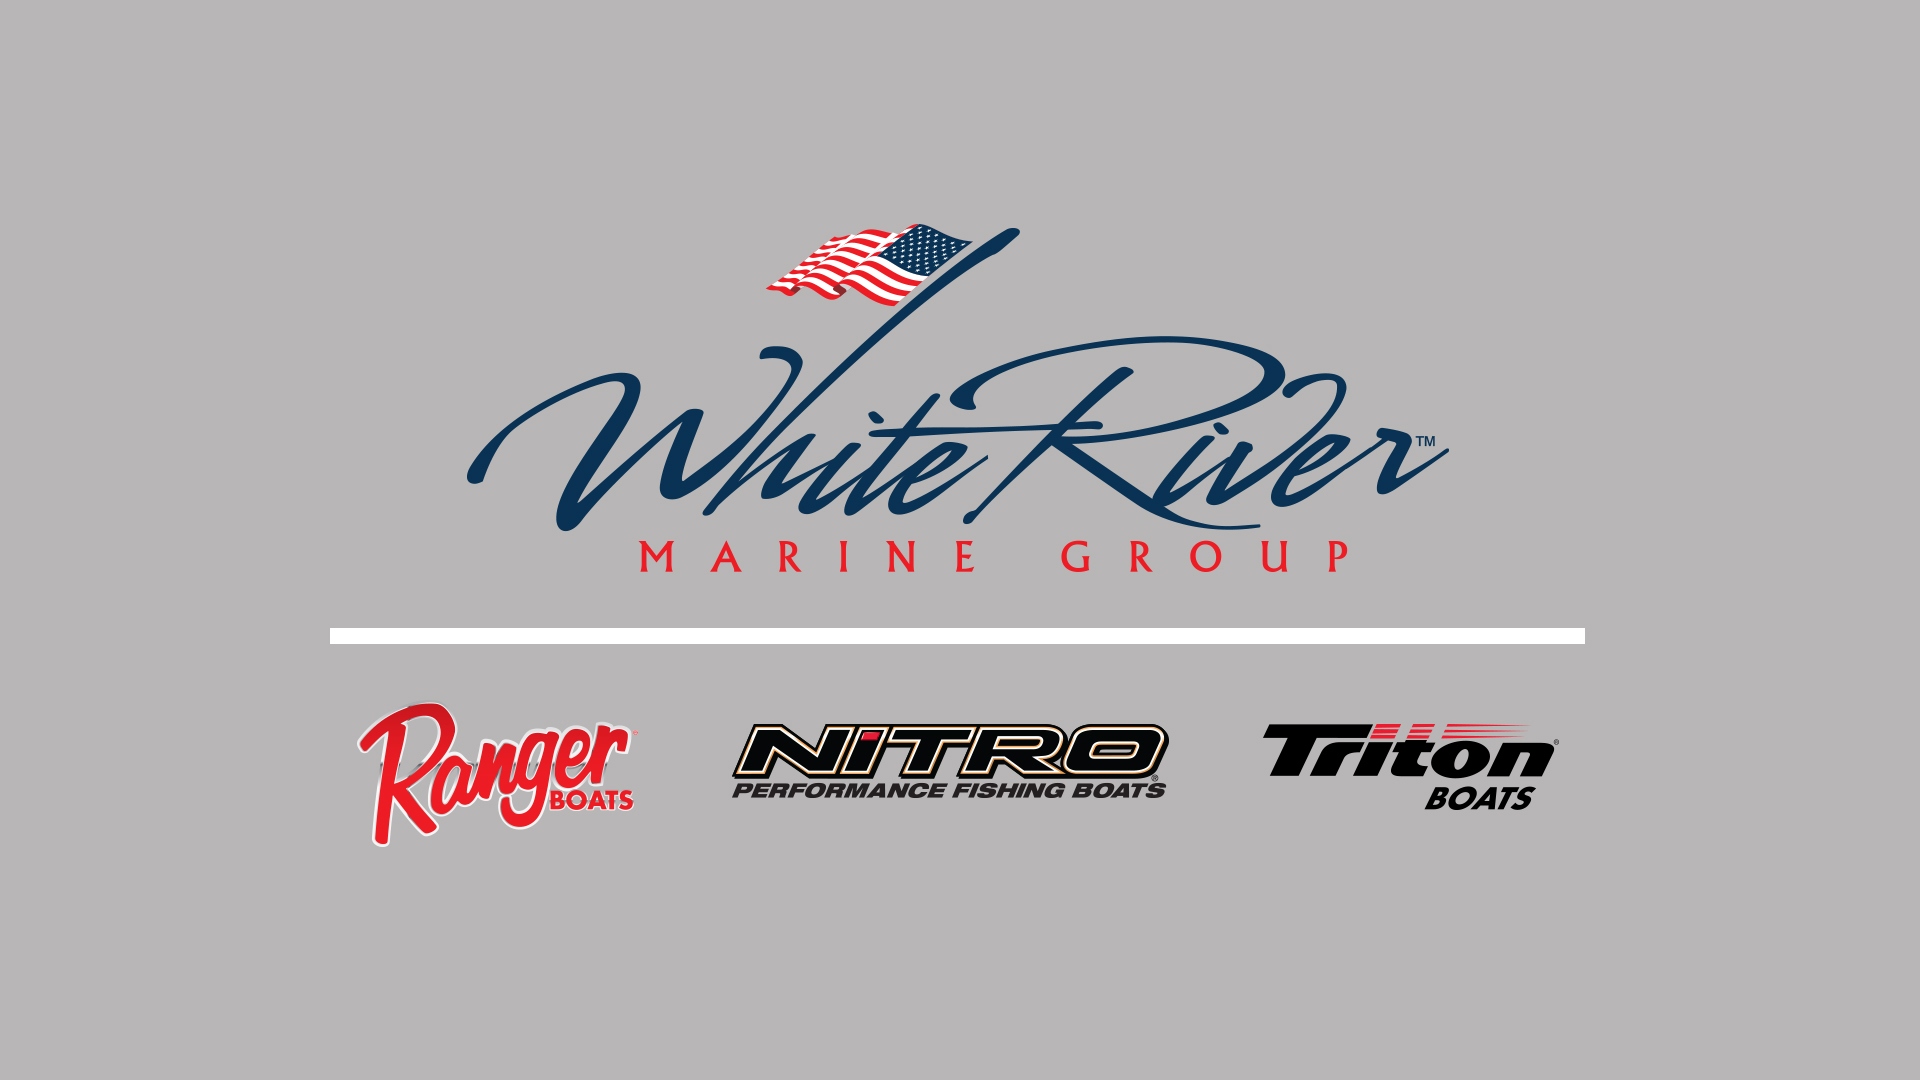 NEW sale! Ranger Boats Team Fishing boat Logo T Shirt